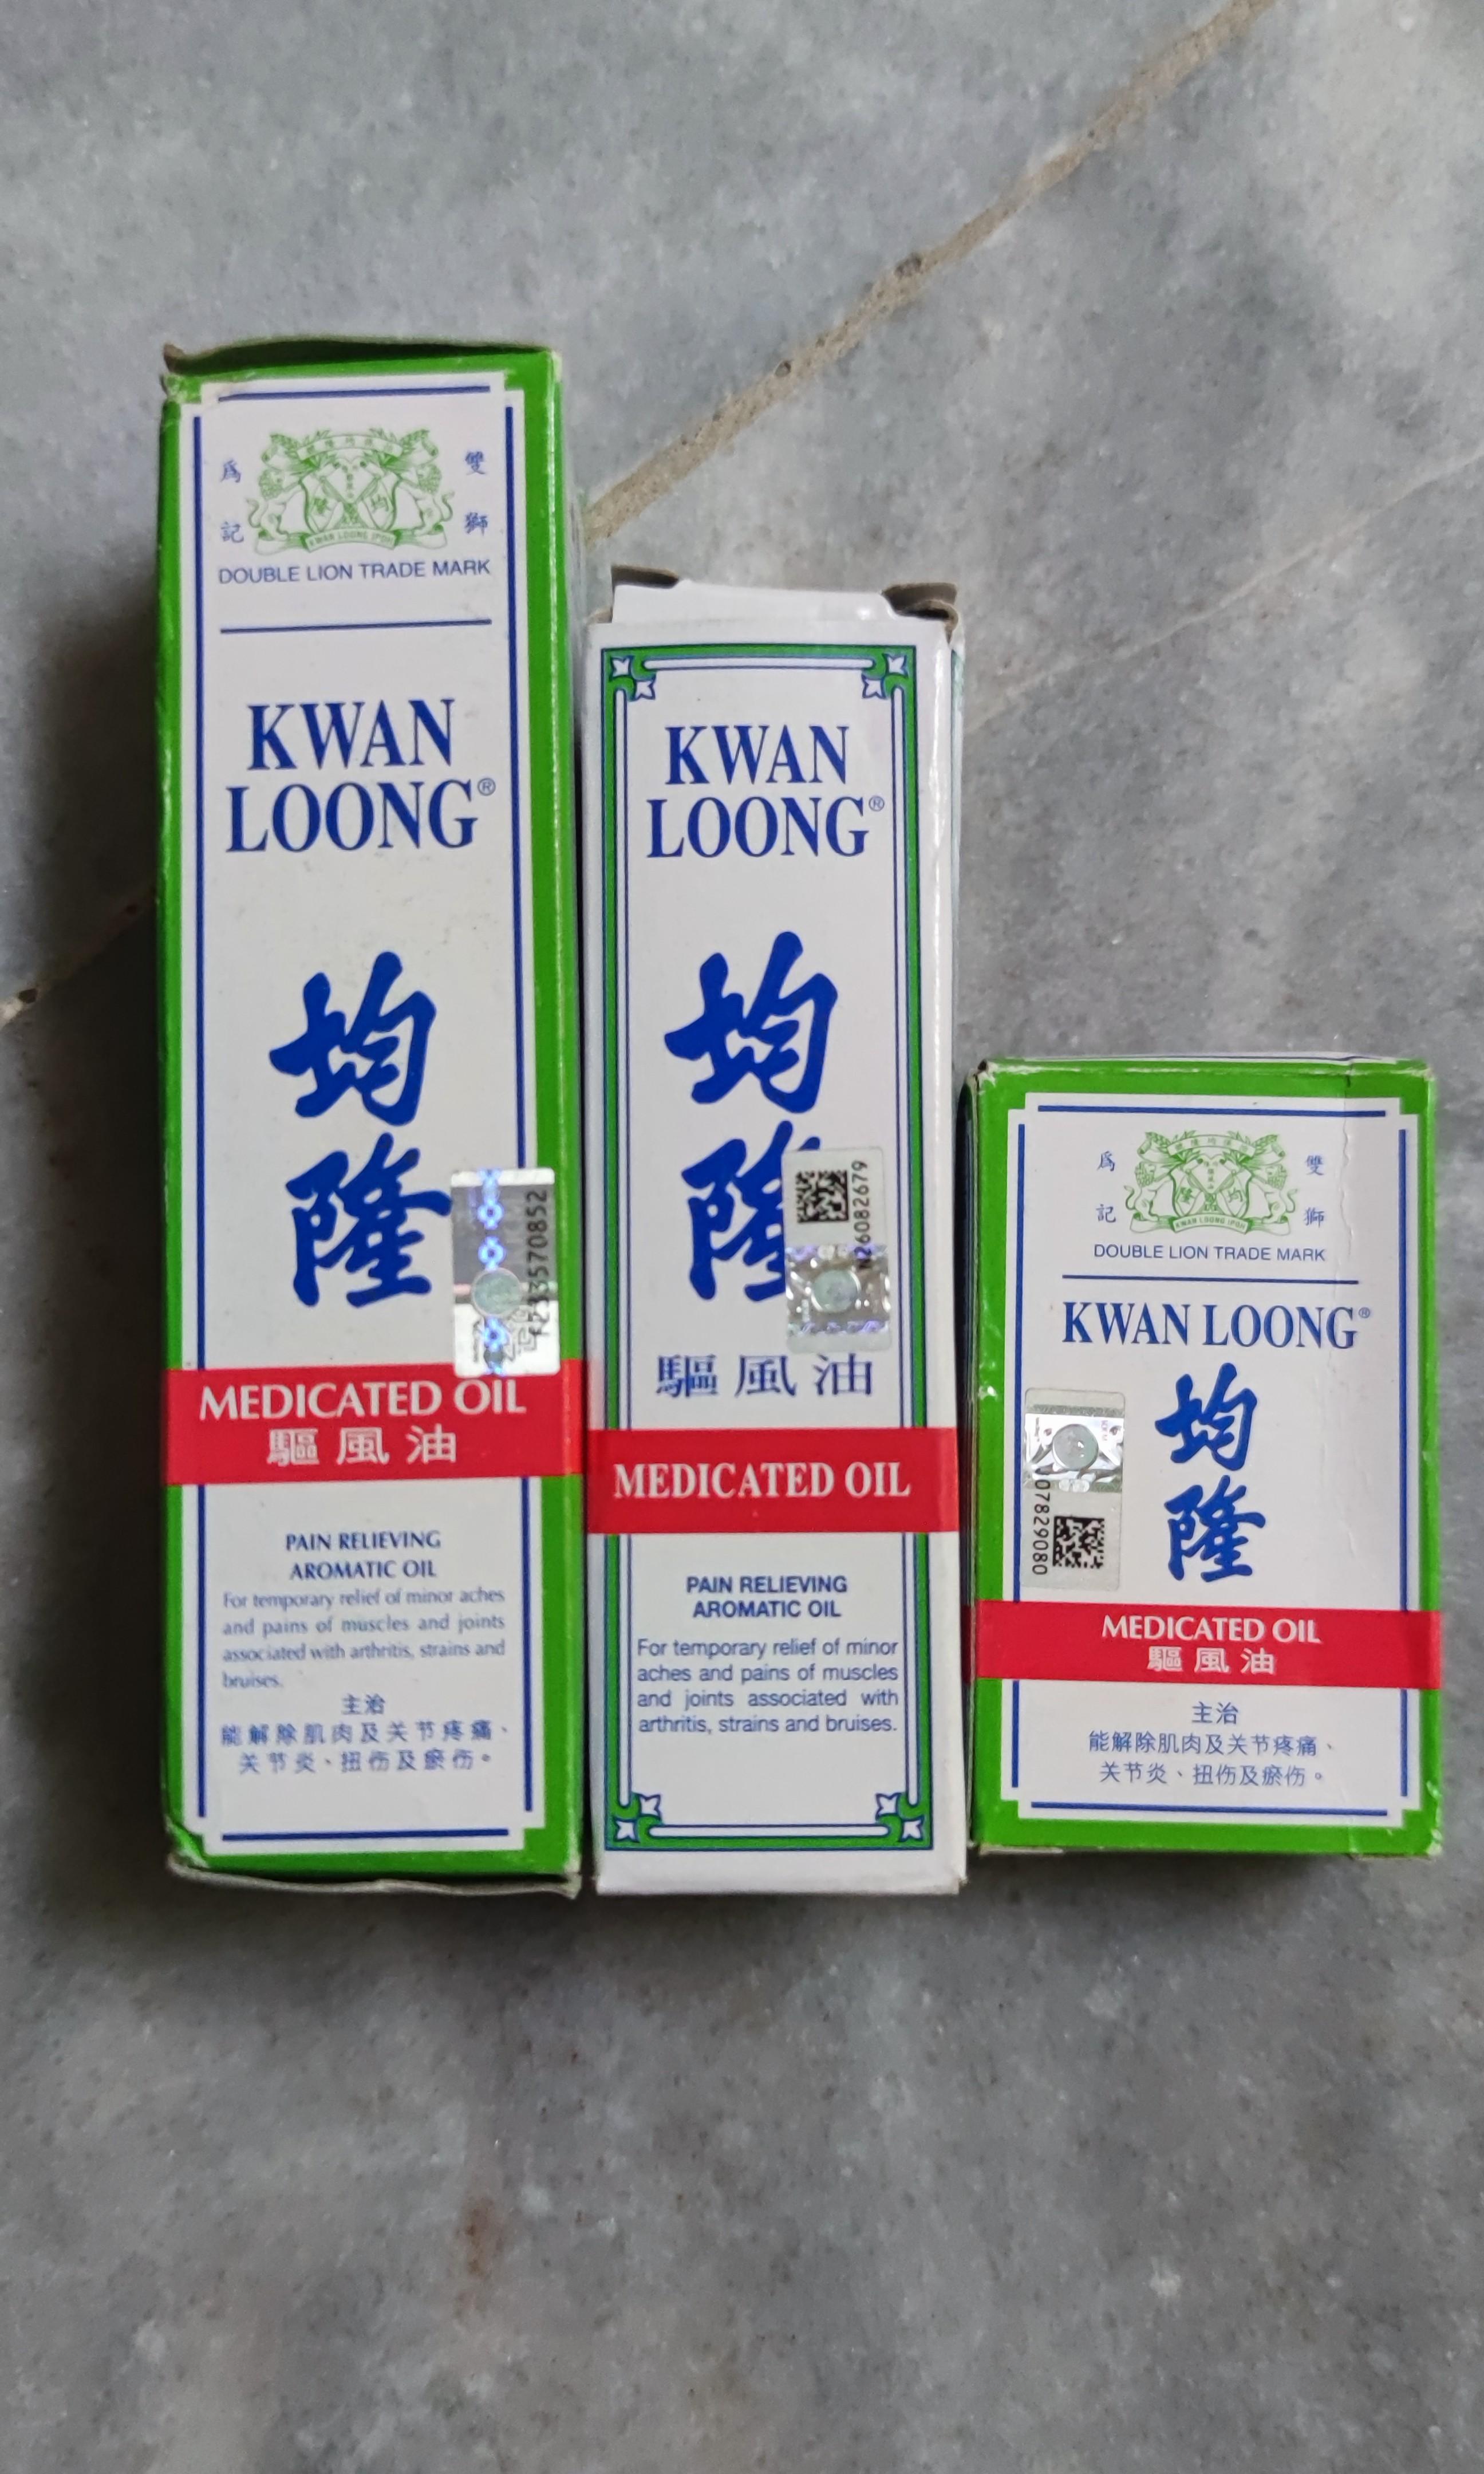 Kwan Loong Medicated Oil 28ml